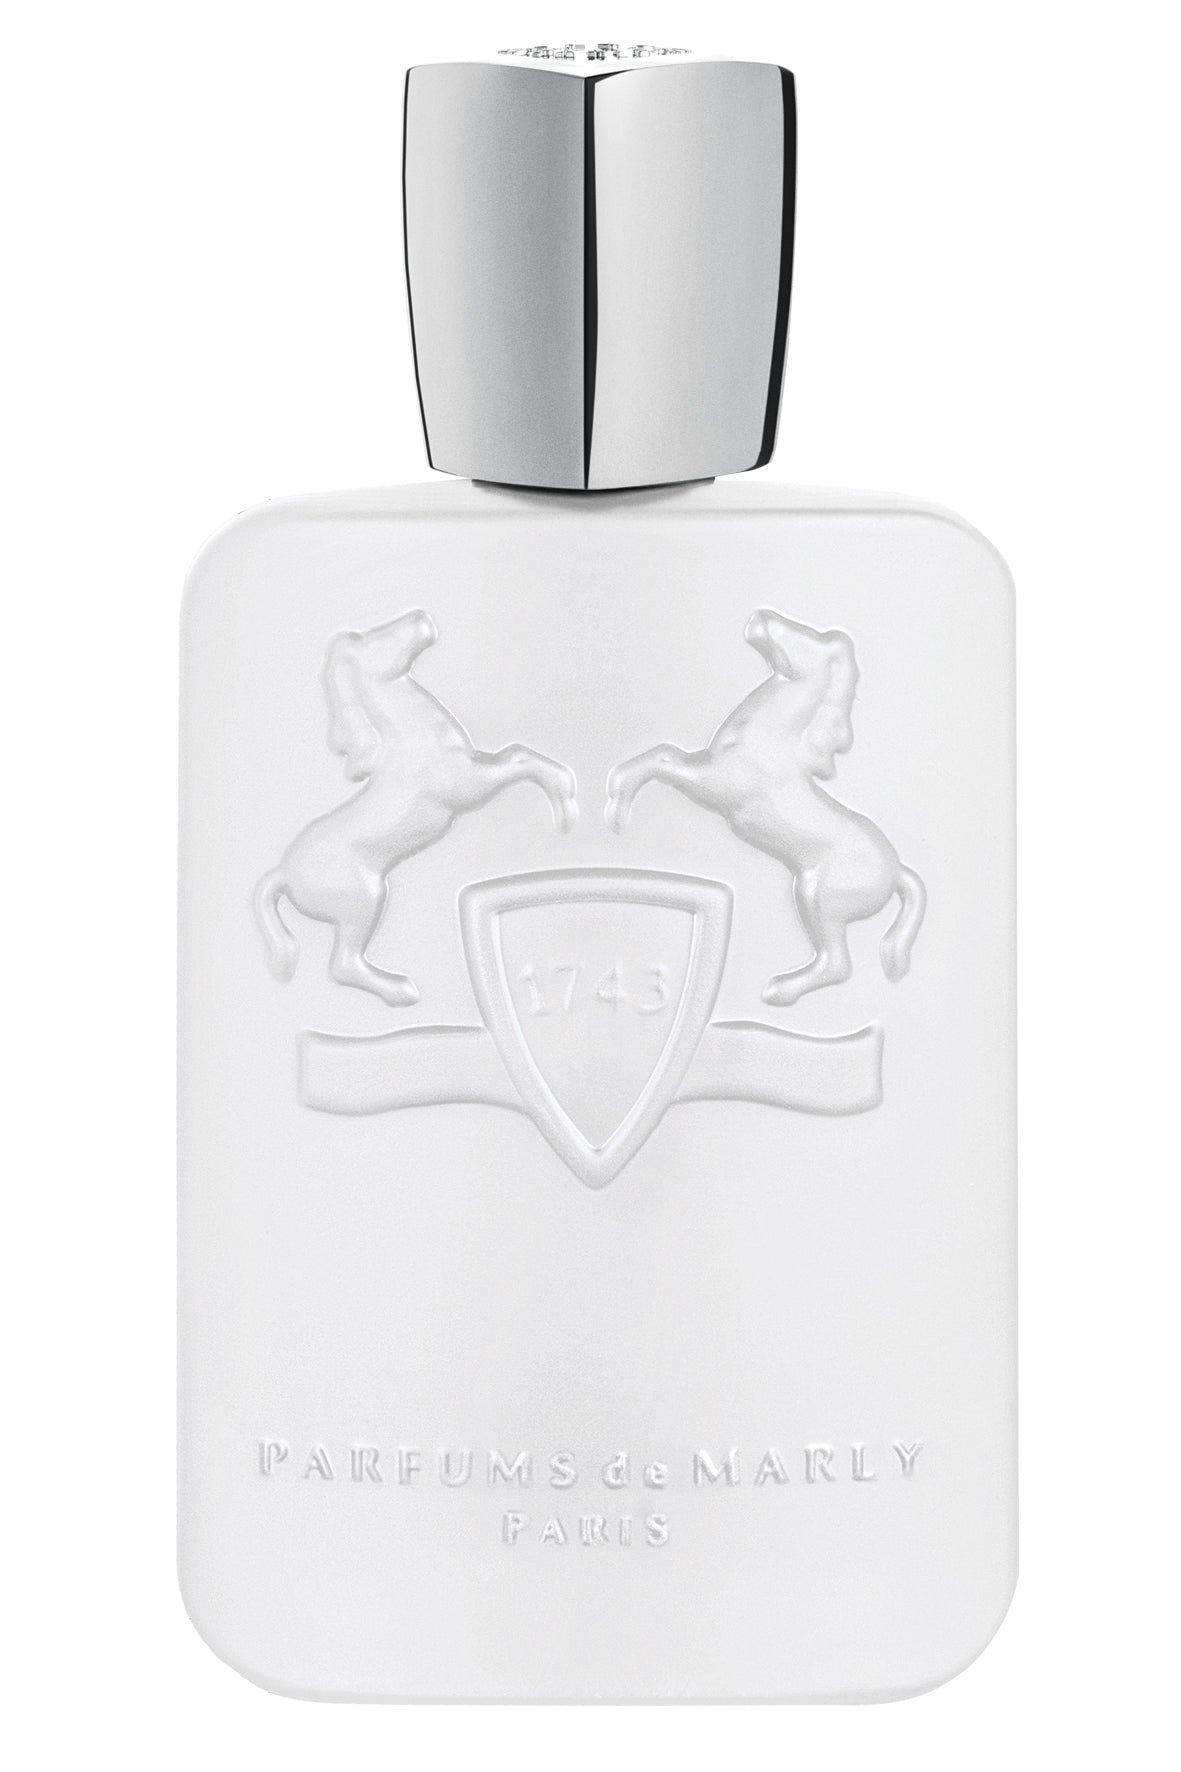 Parfums de Marly – Galloway - Danae Profumeria